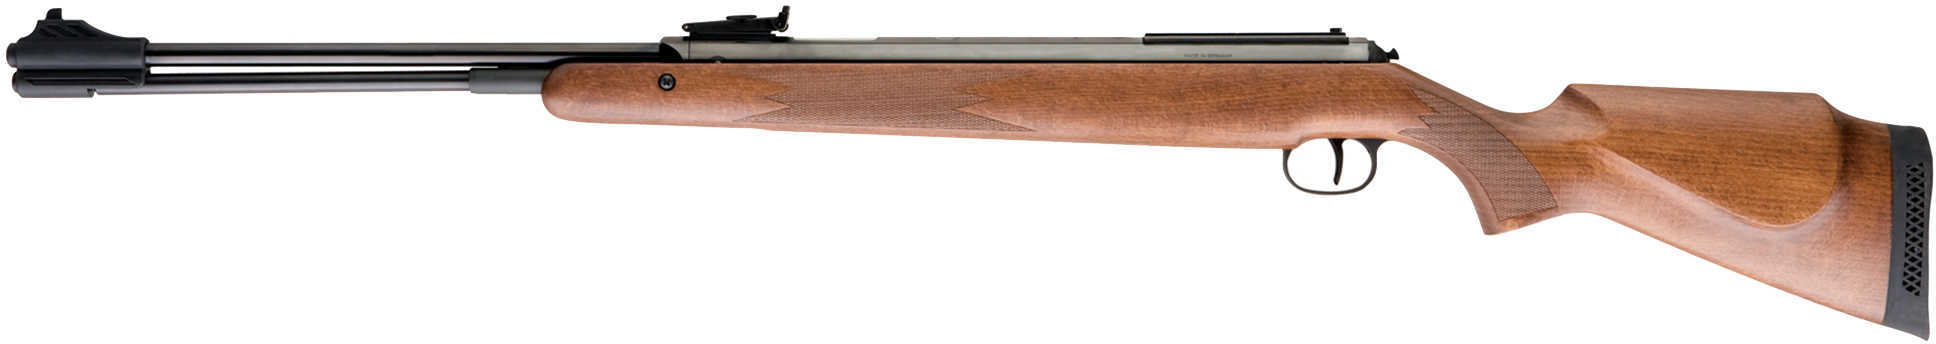 Umarex USA Model 460 Magnum, Hardwood .22 Pellet, Gun Only 2166447